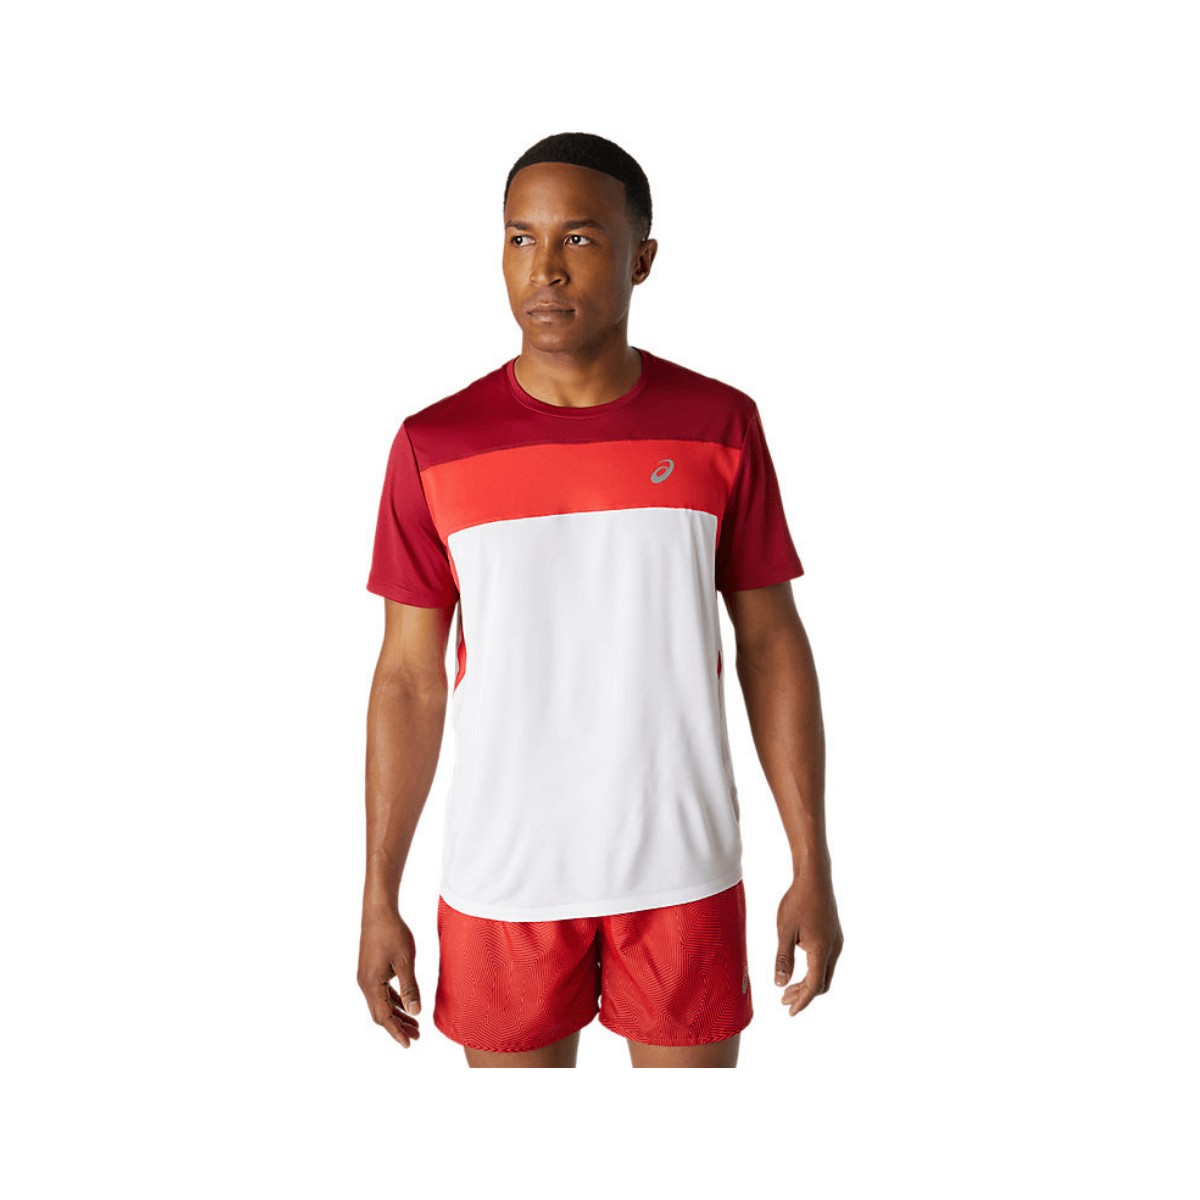 Camiseta de manga curta Asics Race SS Garnet Vermelho Branco AW21, Tamanho XS